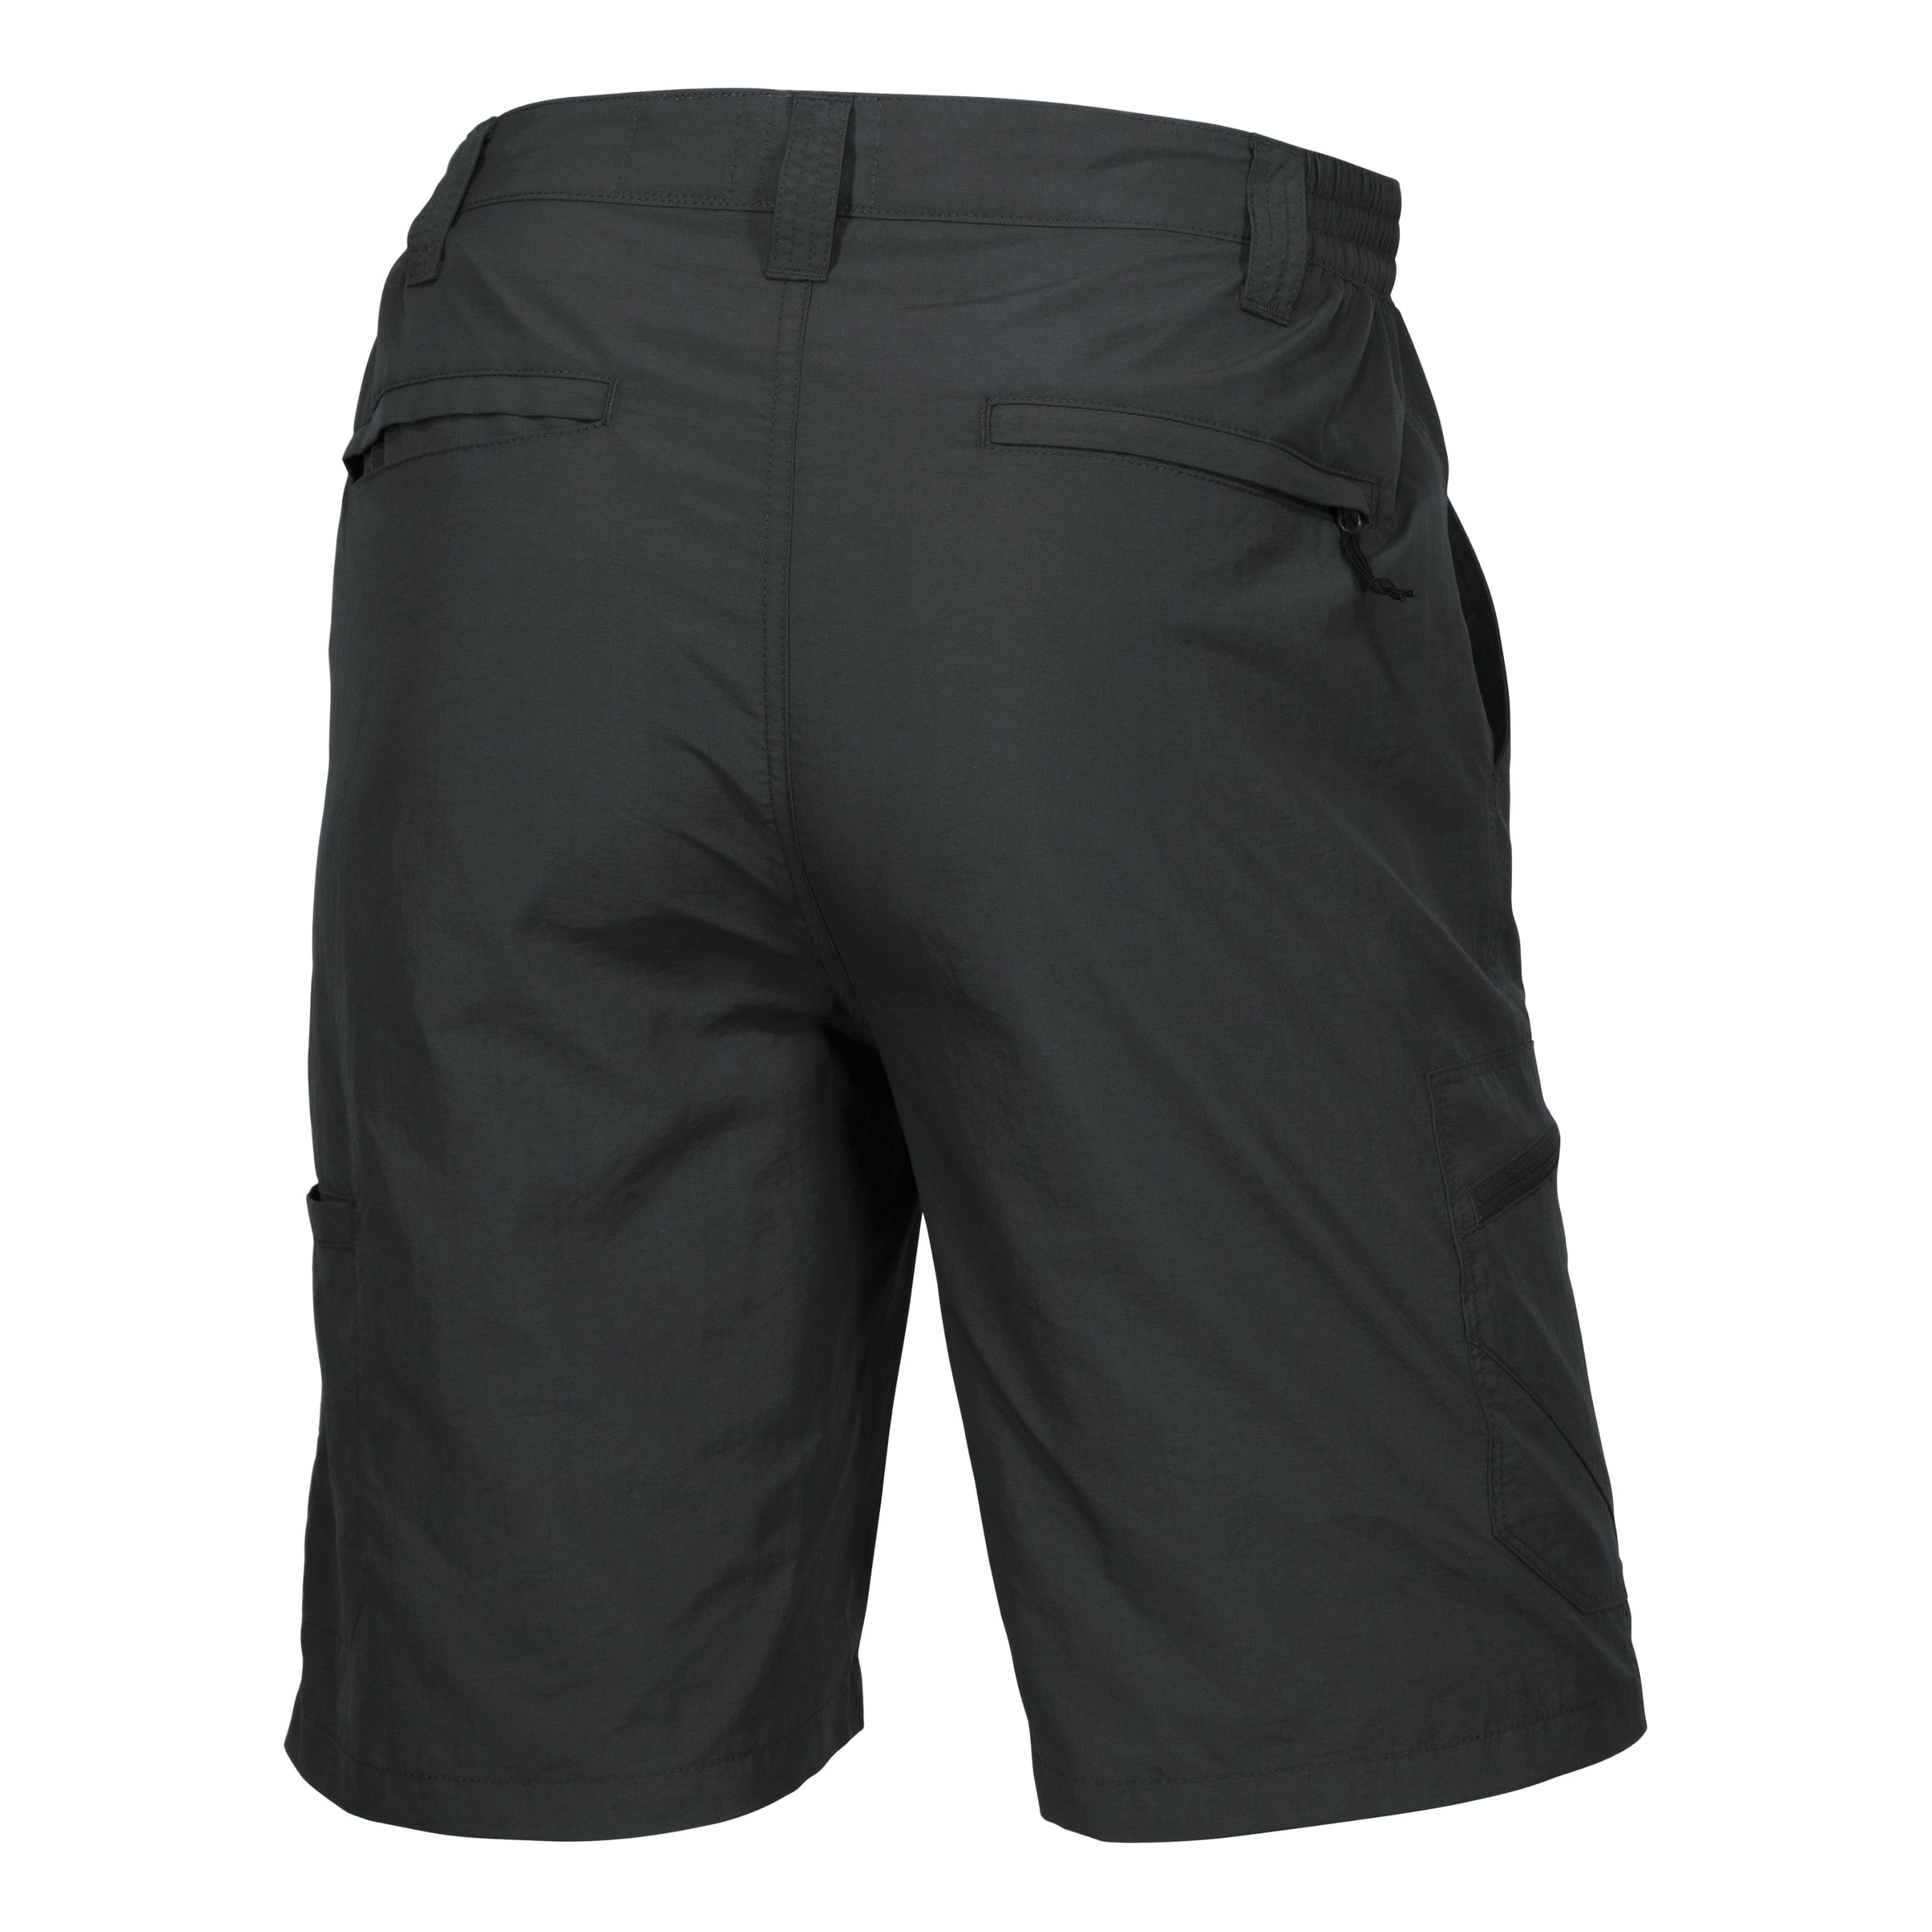 RedHead® Men’s Nylon Shorts - Forged Iron - back